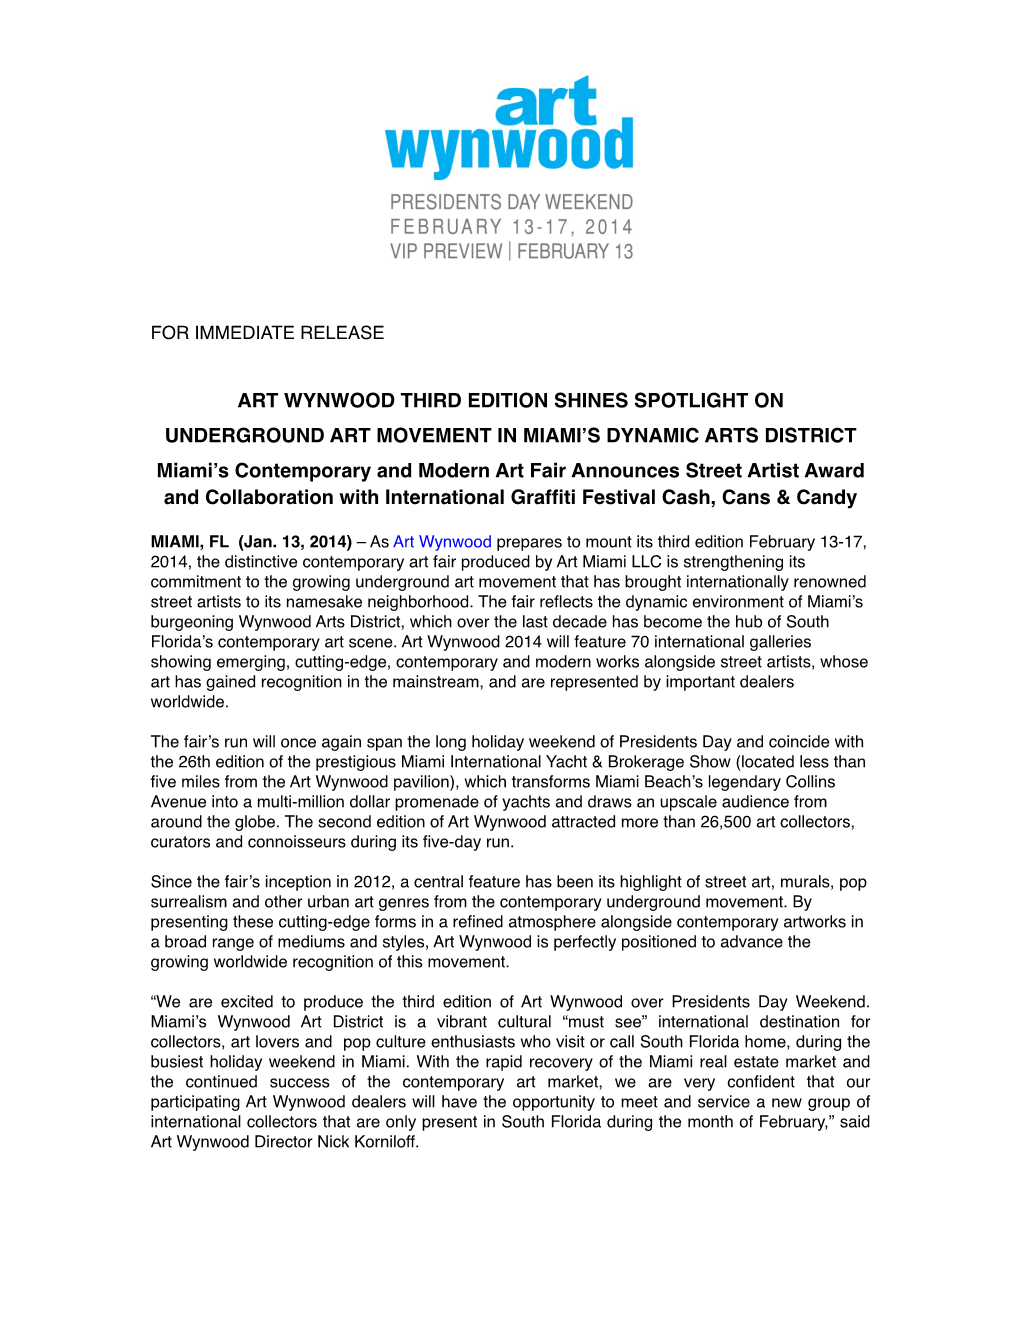 Art Wynwood 2014 Announcement Rel. FINAL Diana